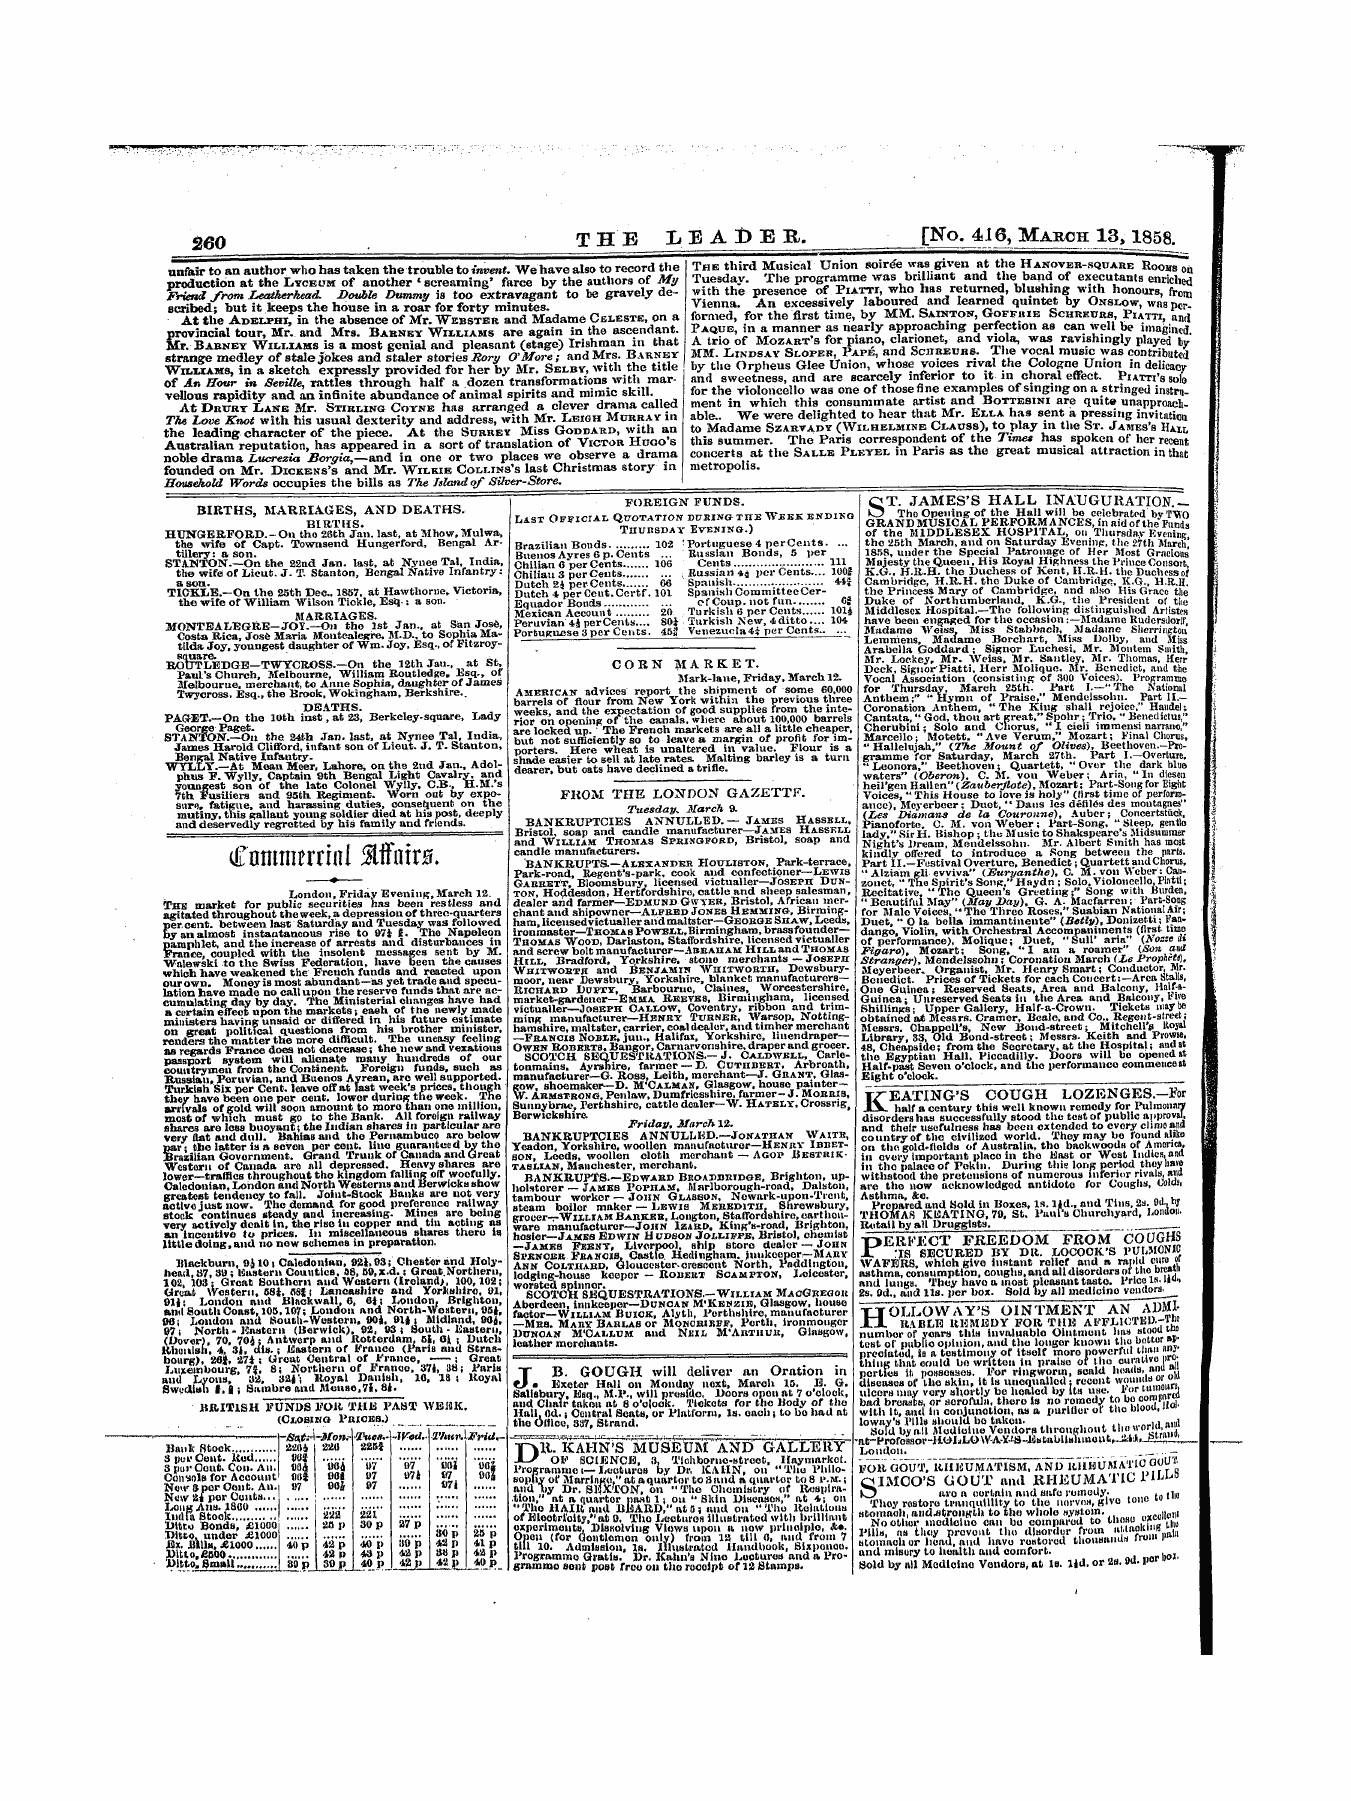 Leader (1850-1860): jS F Y, 1st edition - «Pmttm«Rrfnl Fflfltitw Ulntnmtrniu .#110. V^ Muujjuthu ^.Tituivai. +